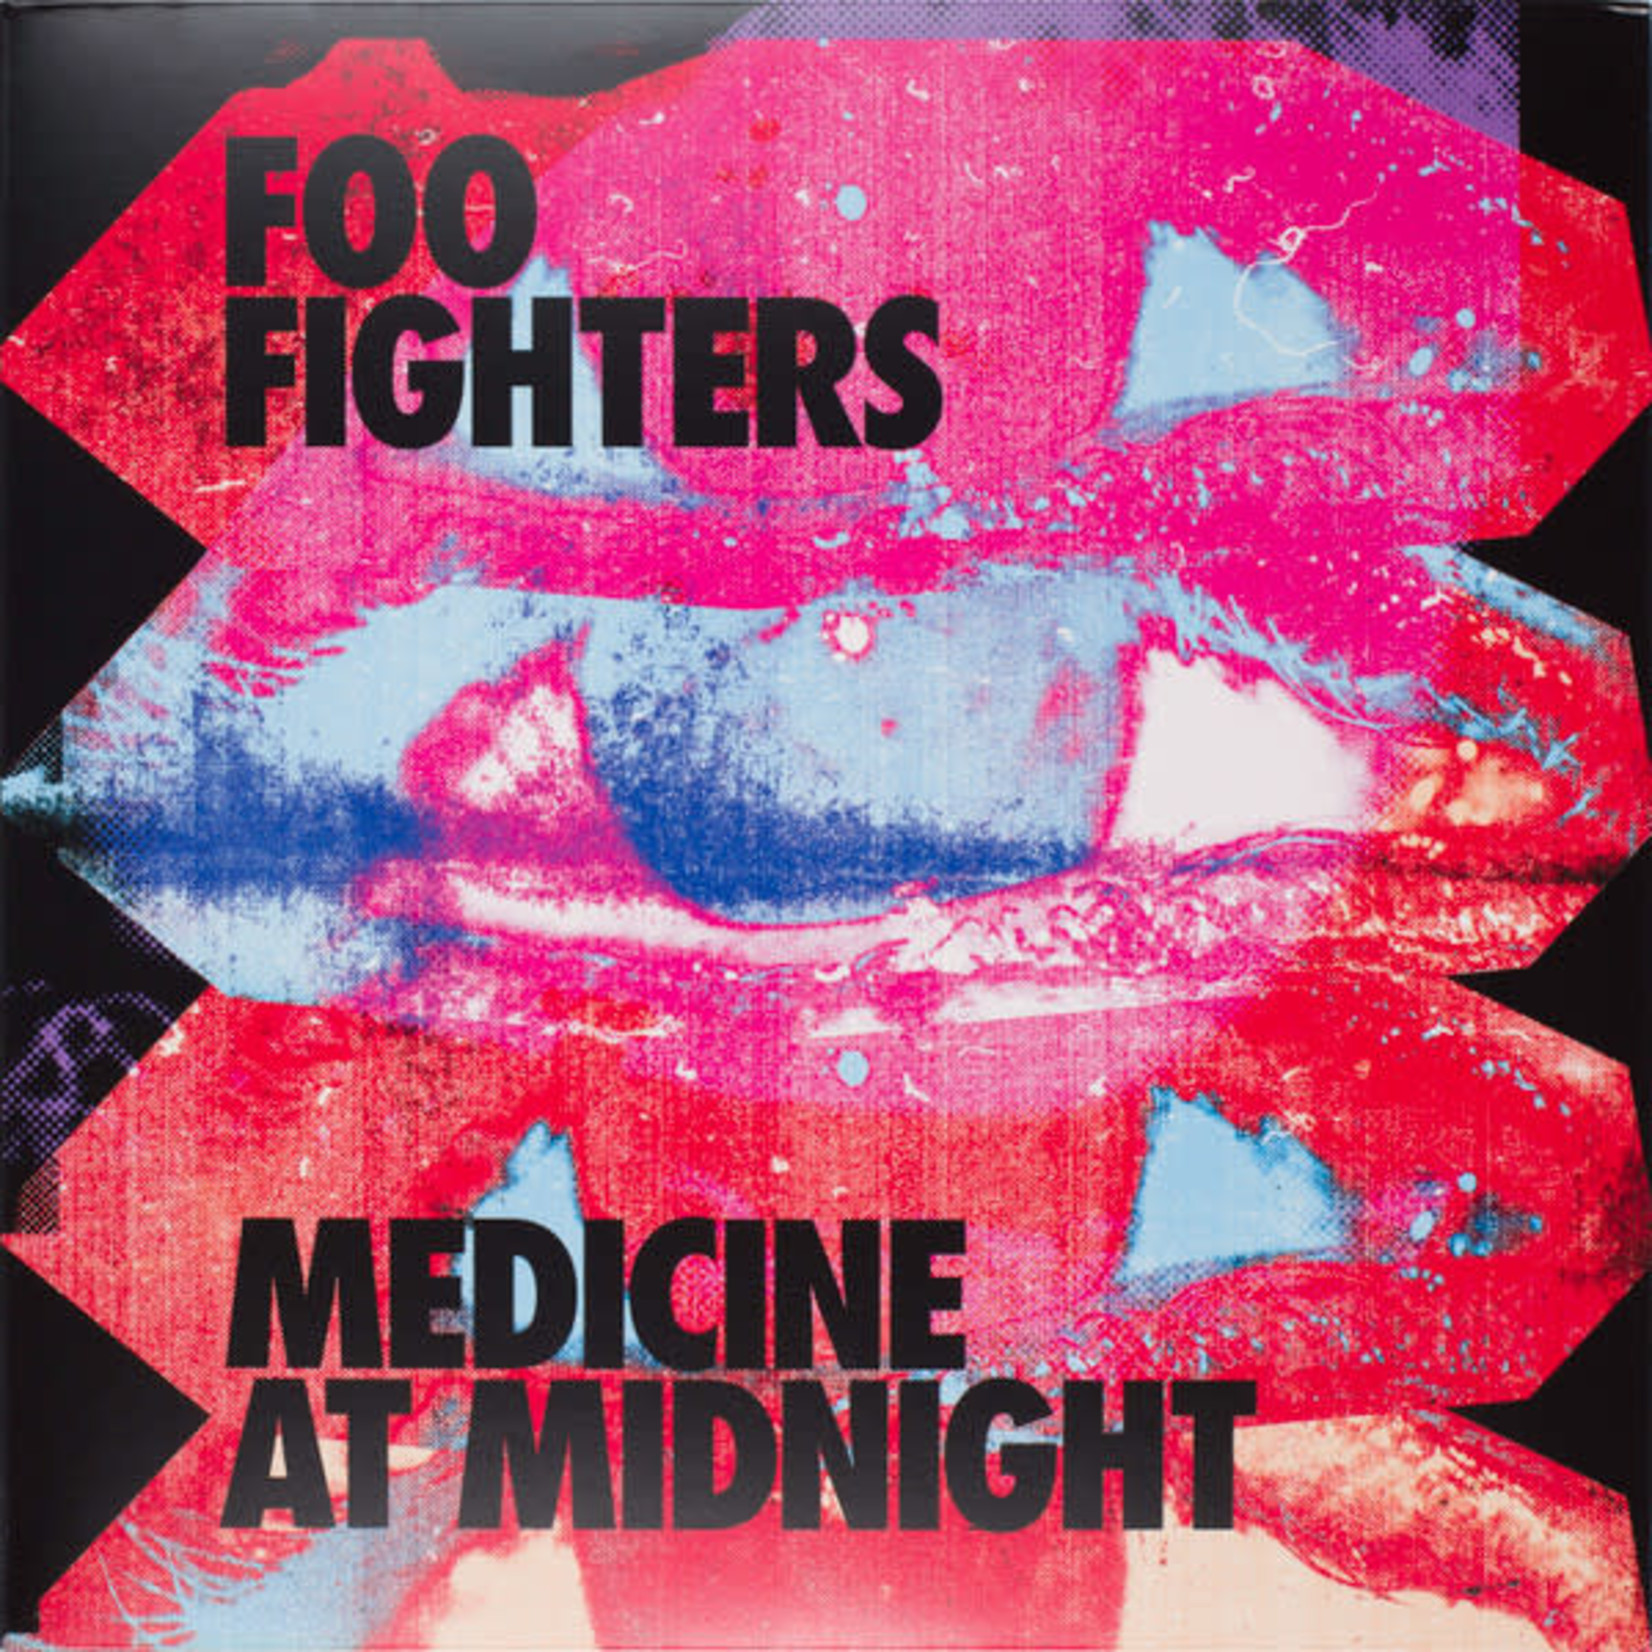 RCA Foo Fighters - Medicine At Midnight (LP)